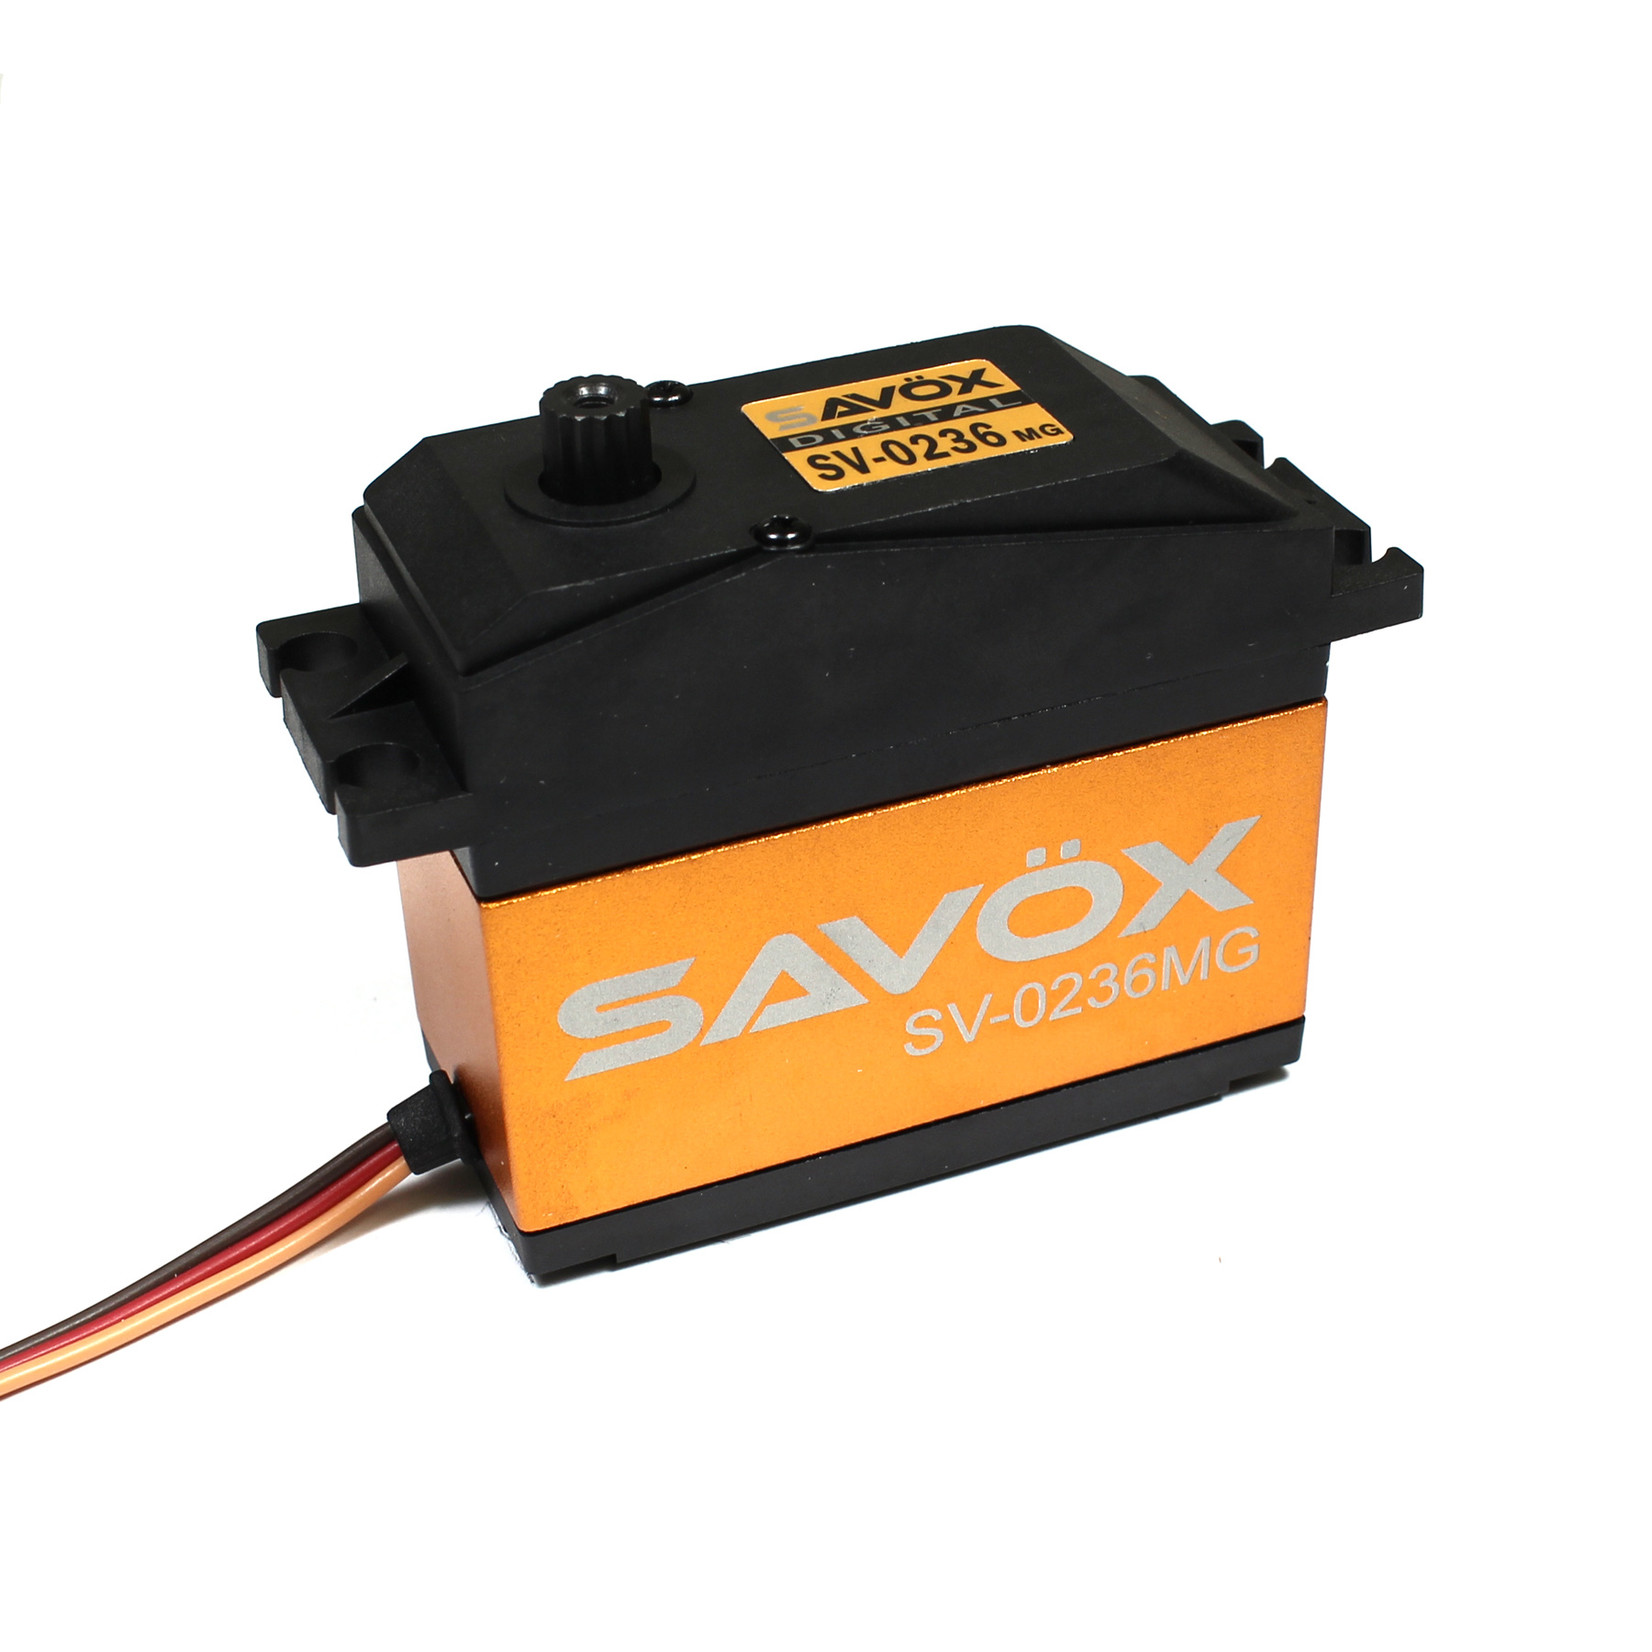 SAVOX SAVSV0236MG  HIGH VOLTAGE 1/5 SCALE SERVO 0.17/555.5 @7.4V